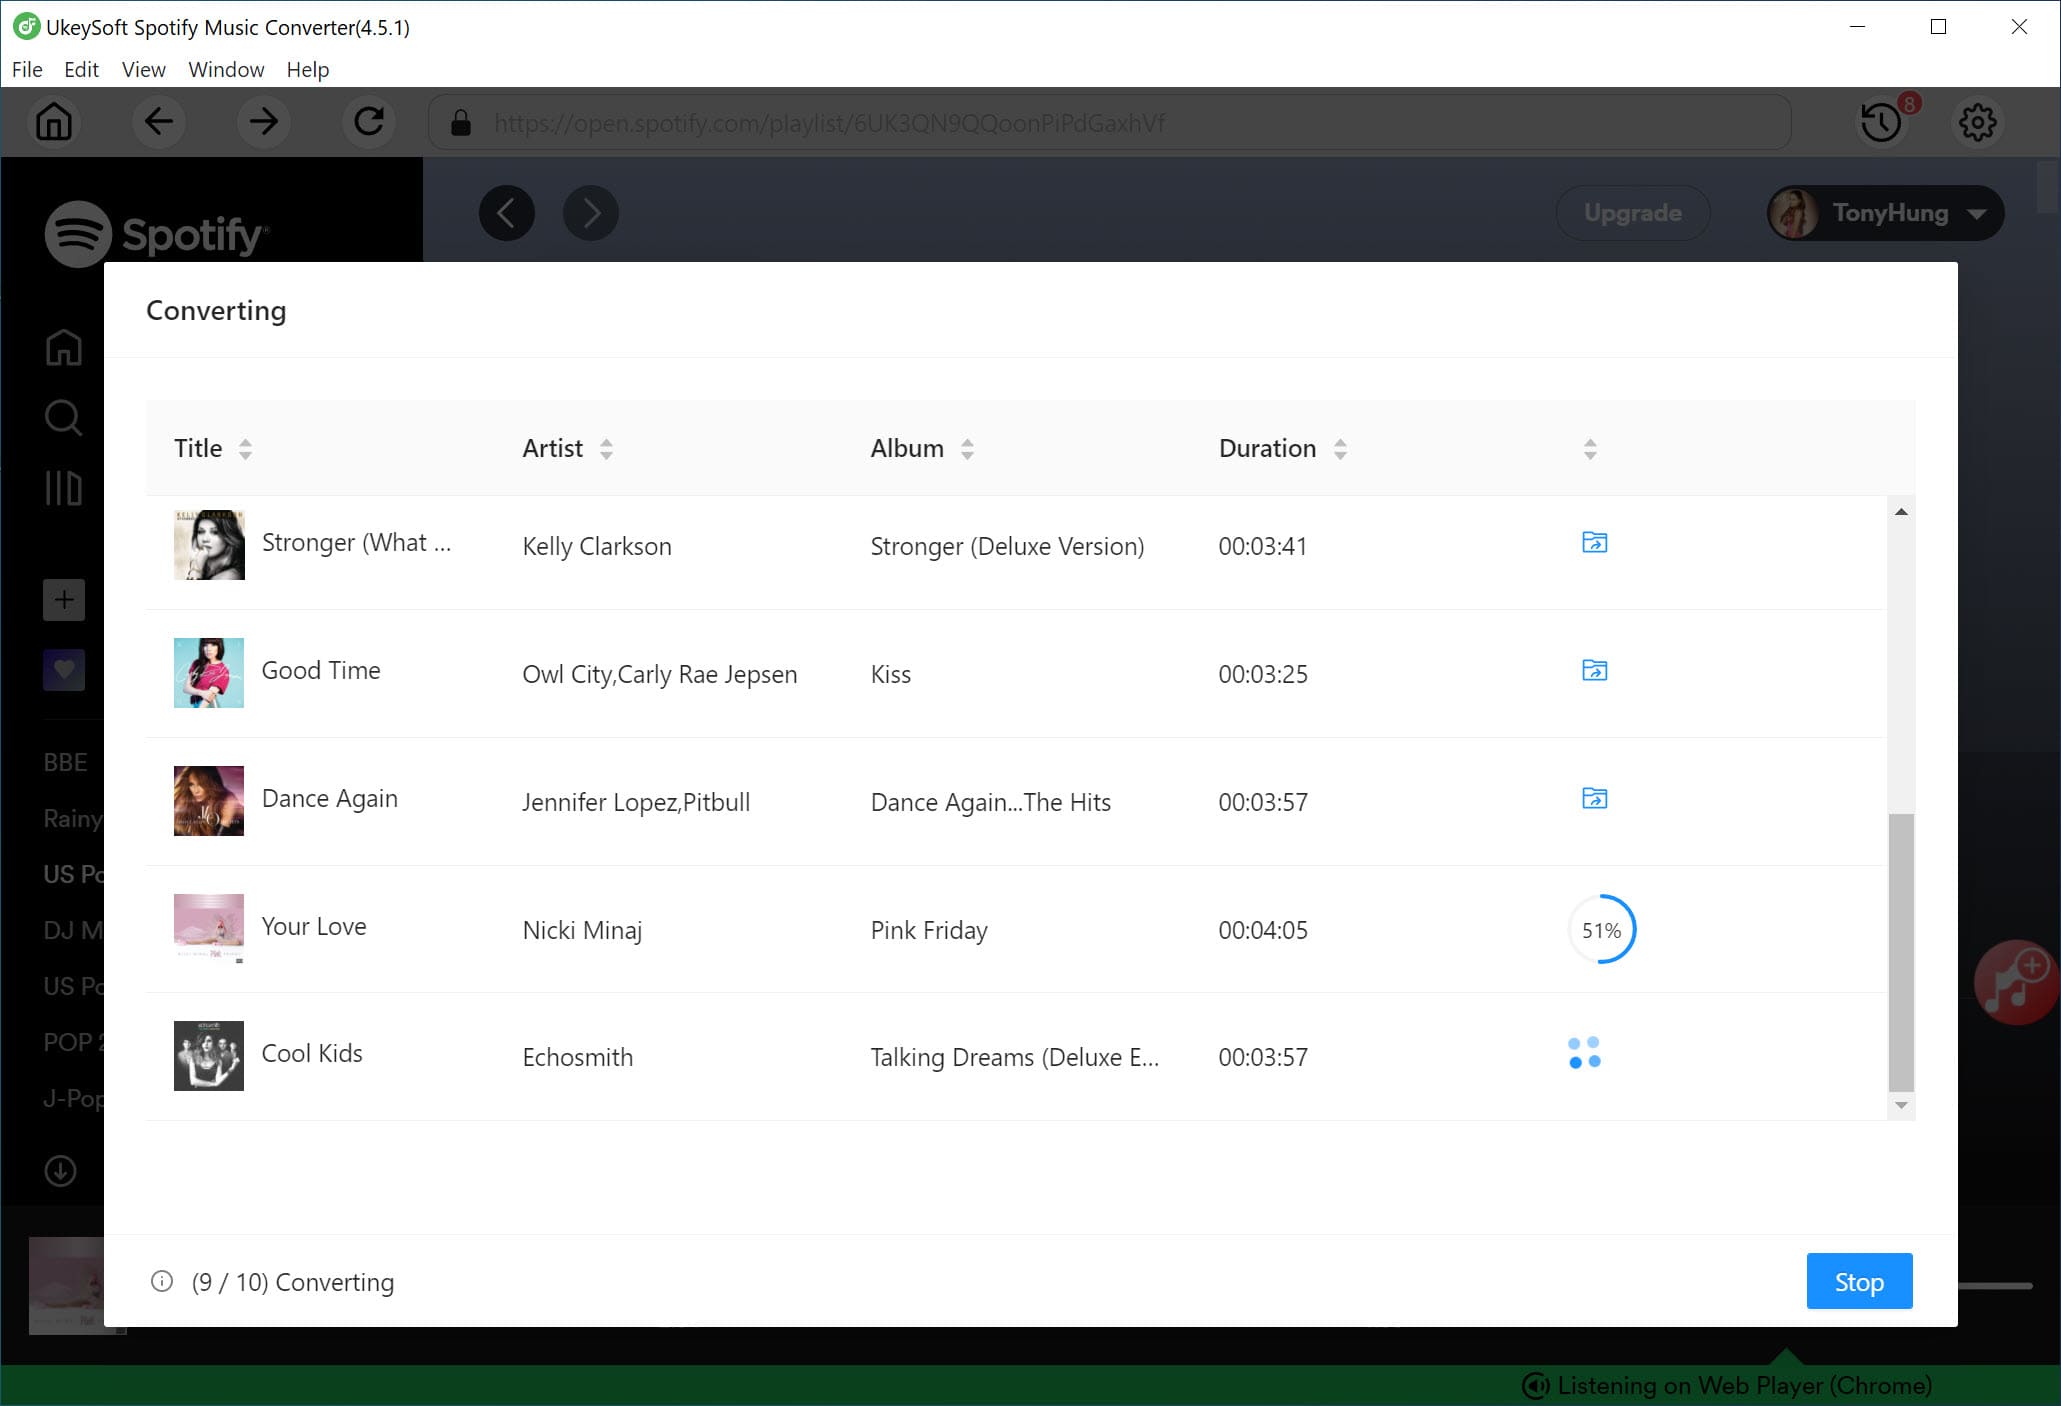 converti i brani di Spotify in MP3